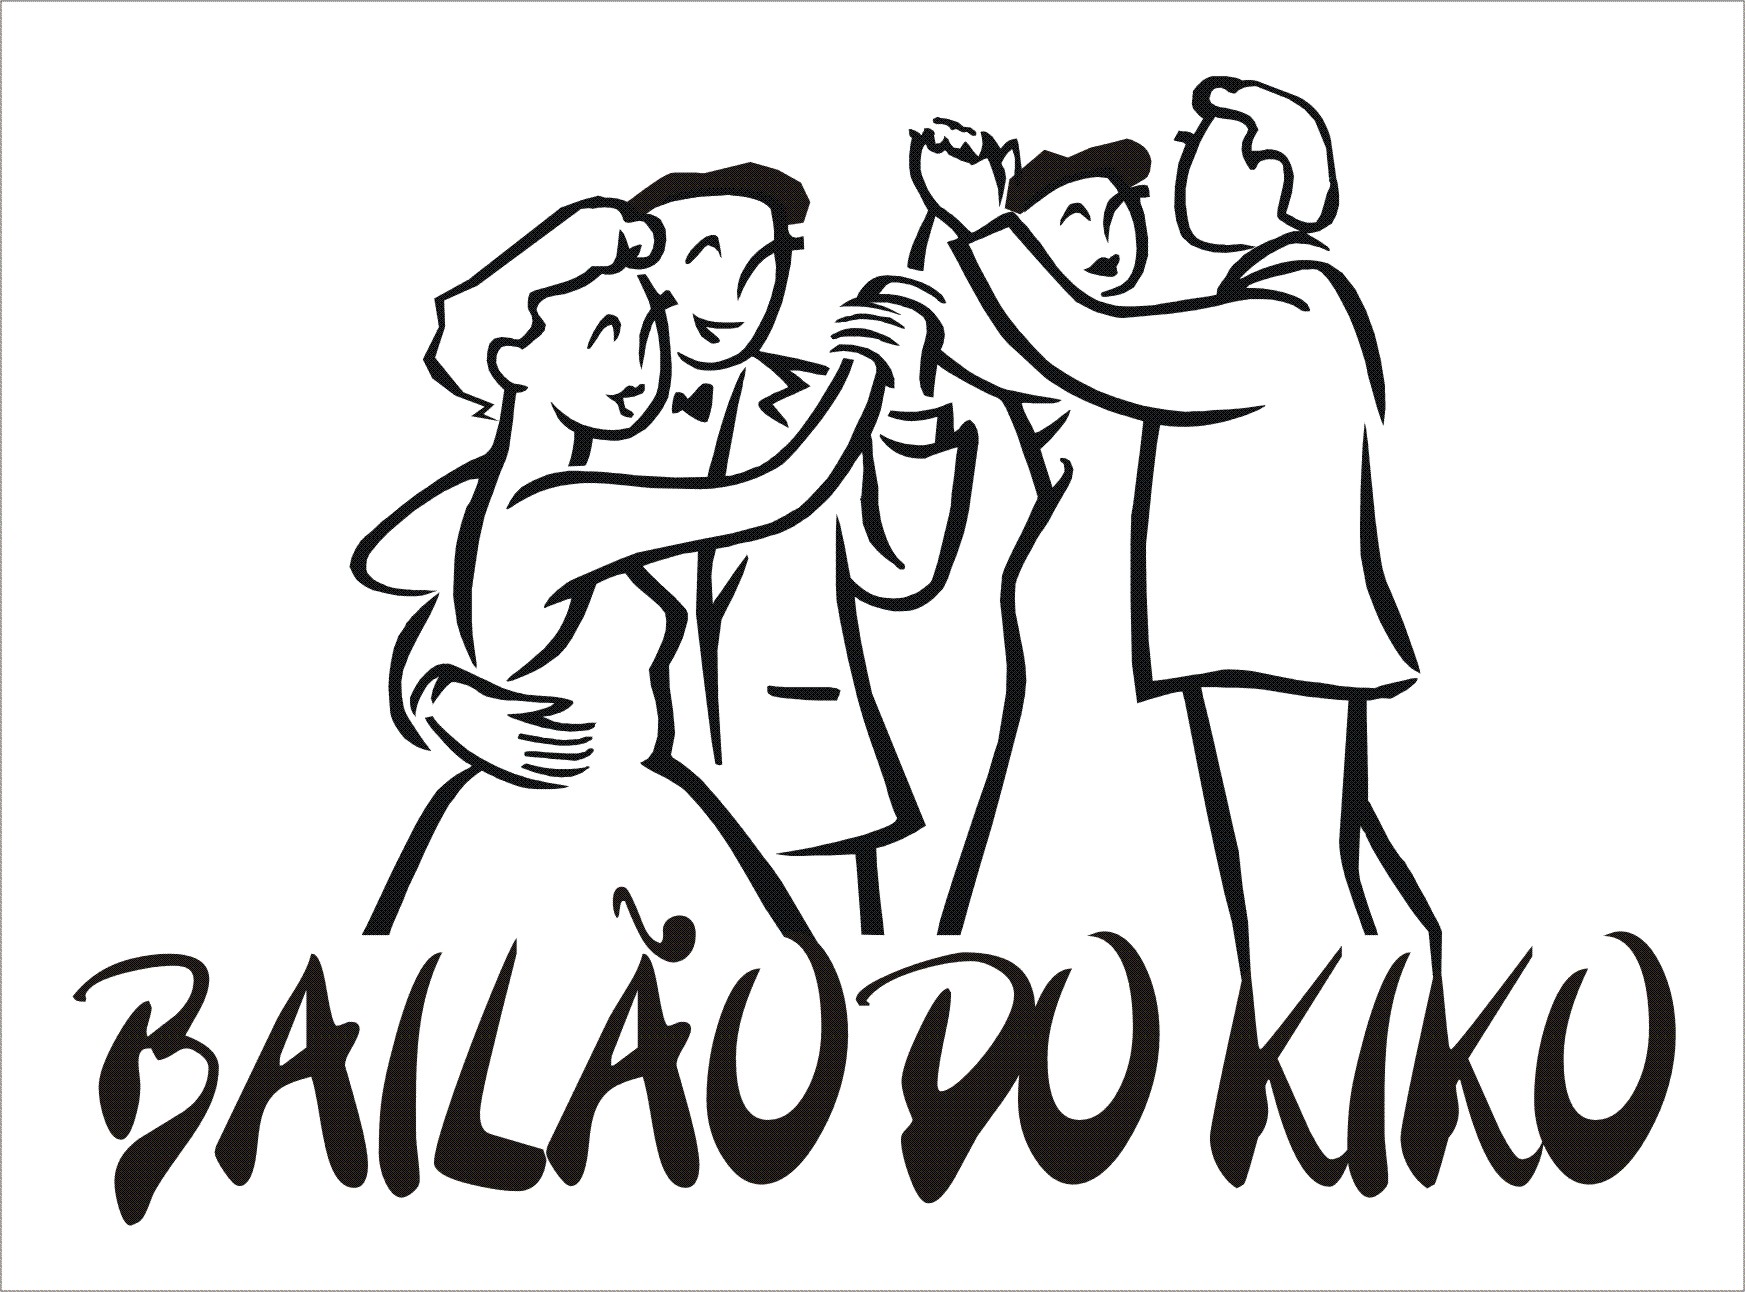 Logotipo Bailão do kIkO